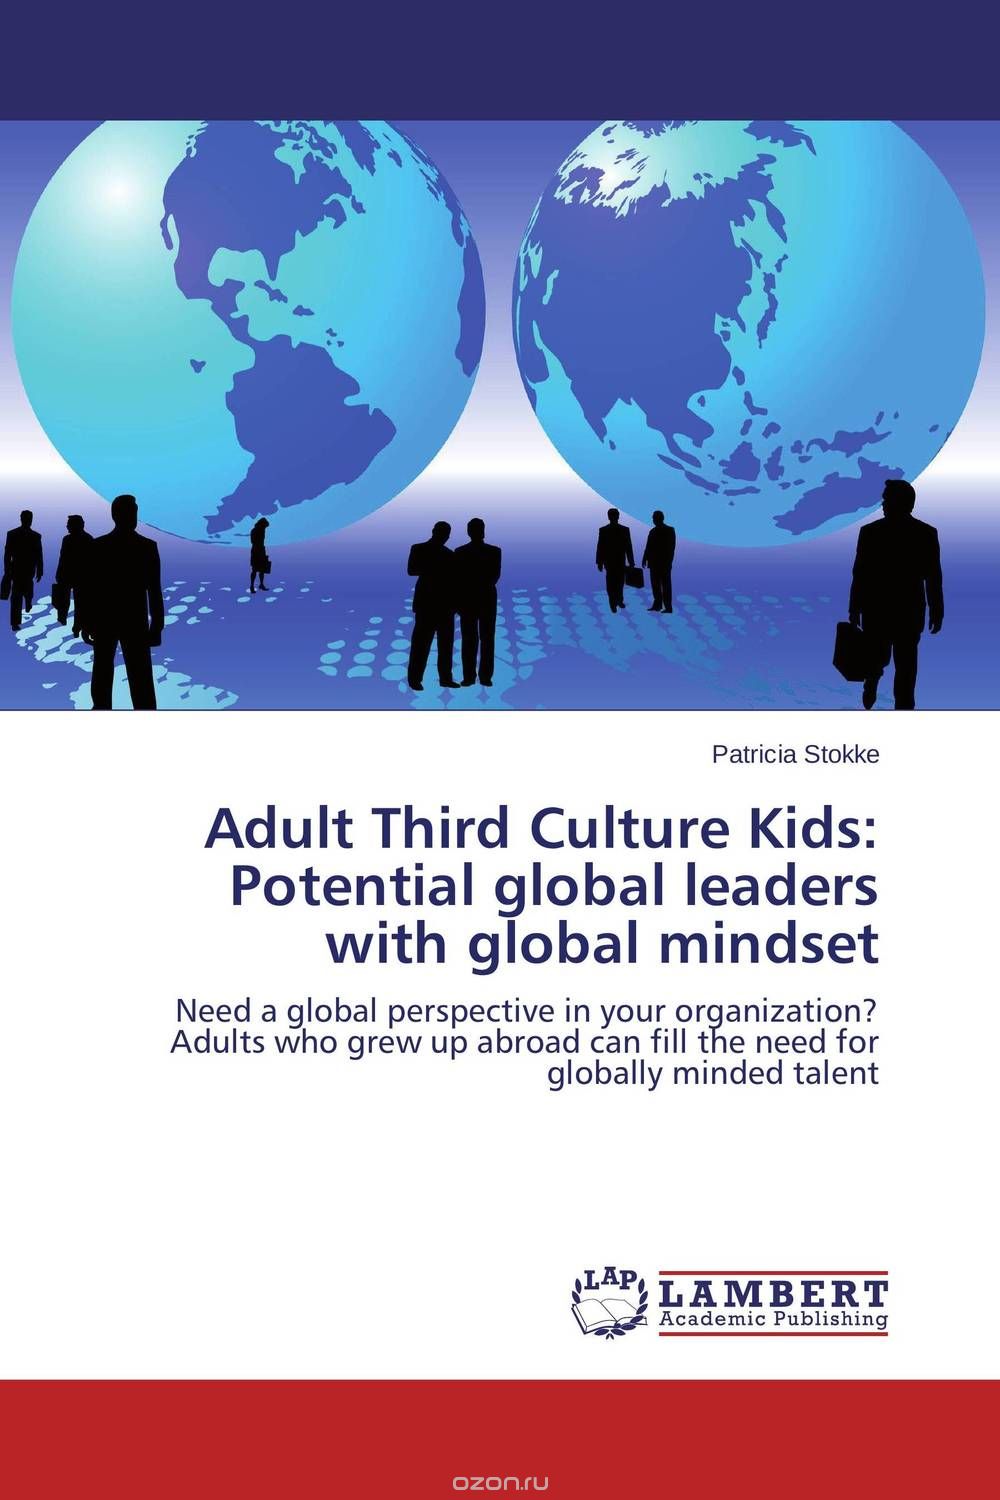 Скачать книгу "Adult Third Culture Kids: Potential global leaders with global mindset"